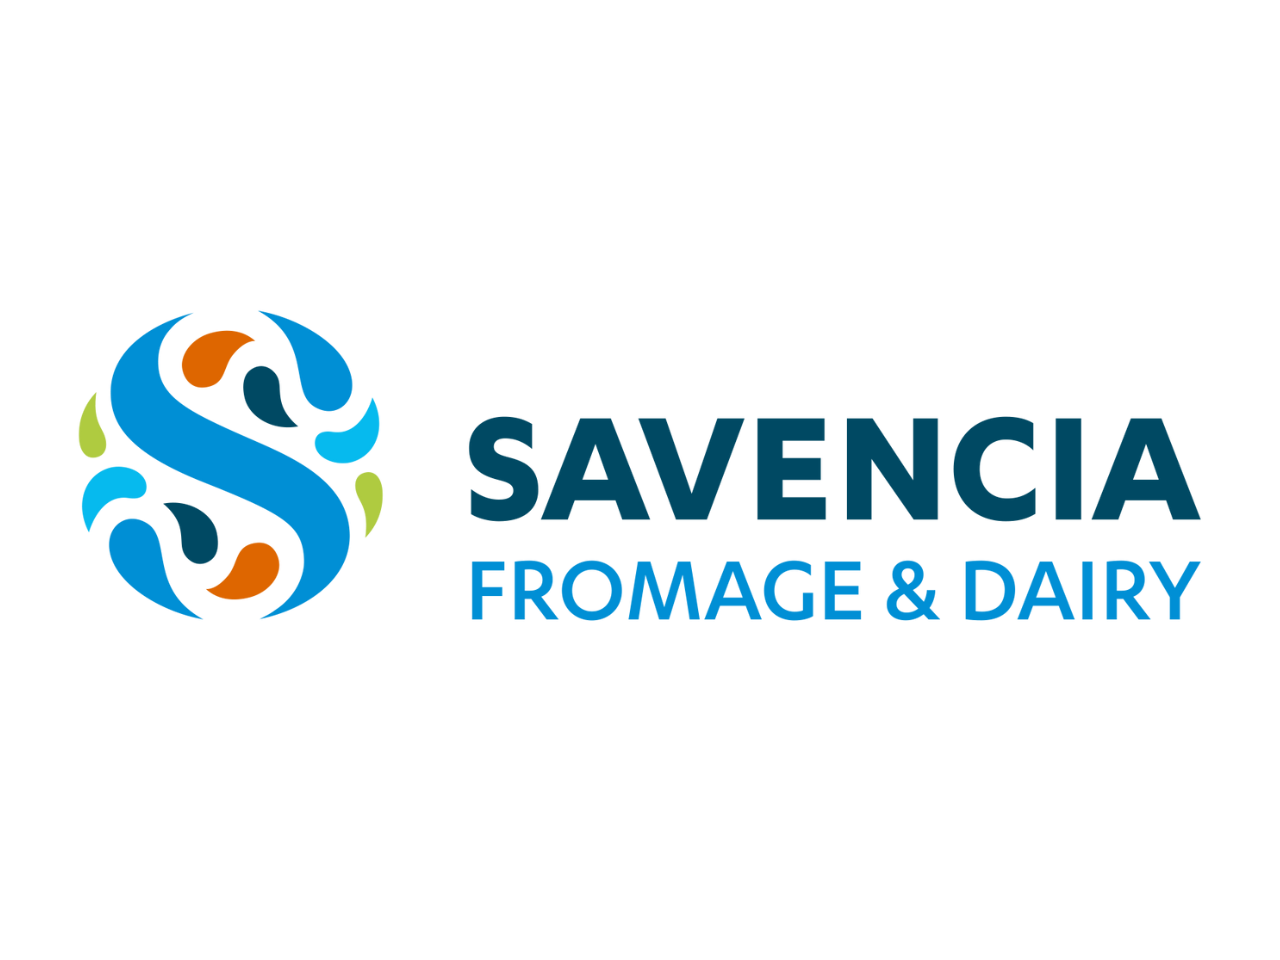 le logo du groupe Savencia Fromage & Dairy